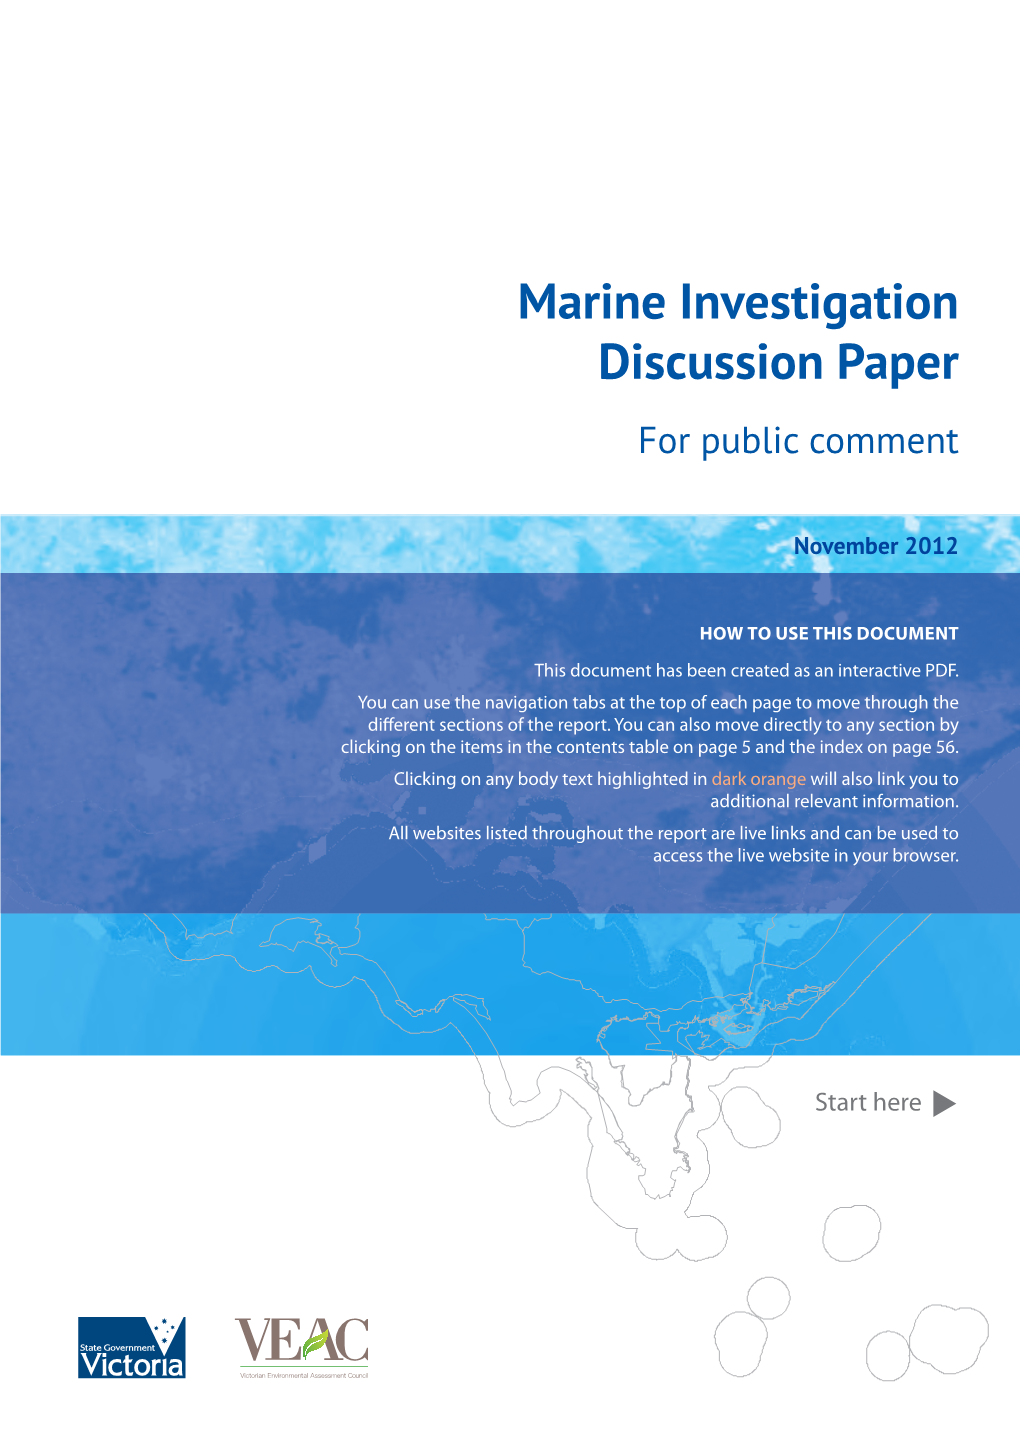 Marine Investigation Discussion Paper for Public Comment